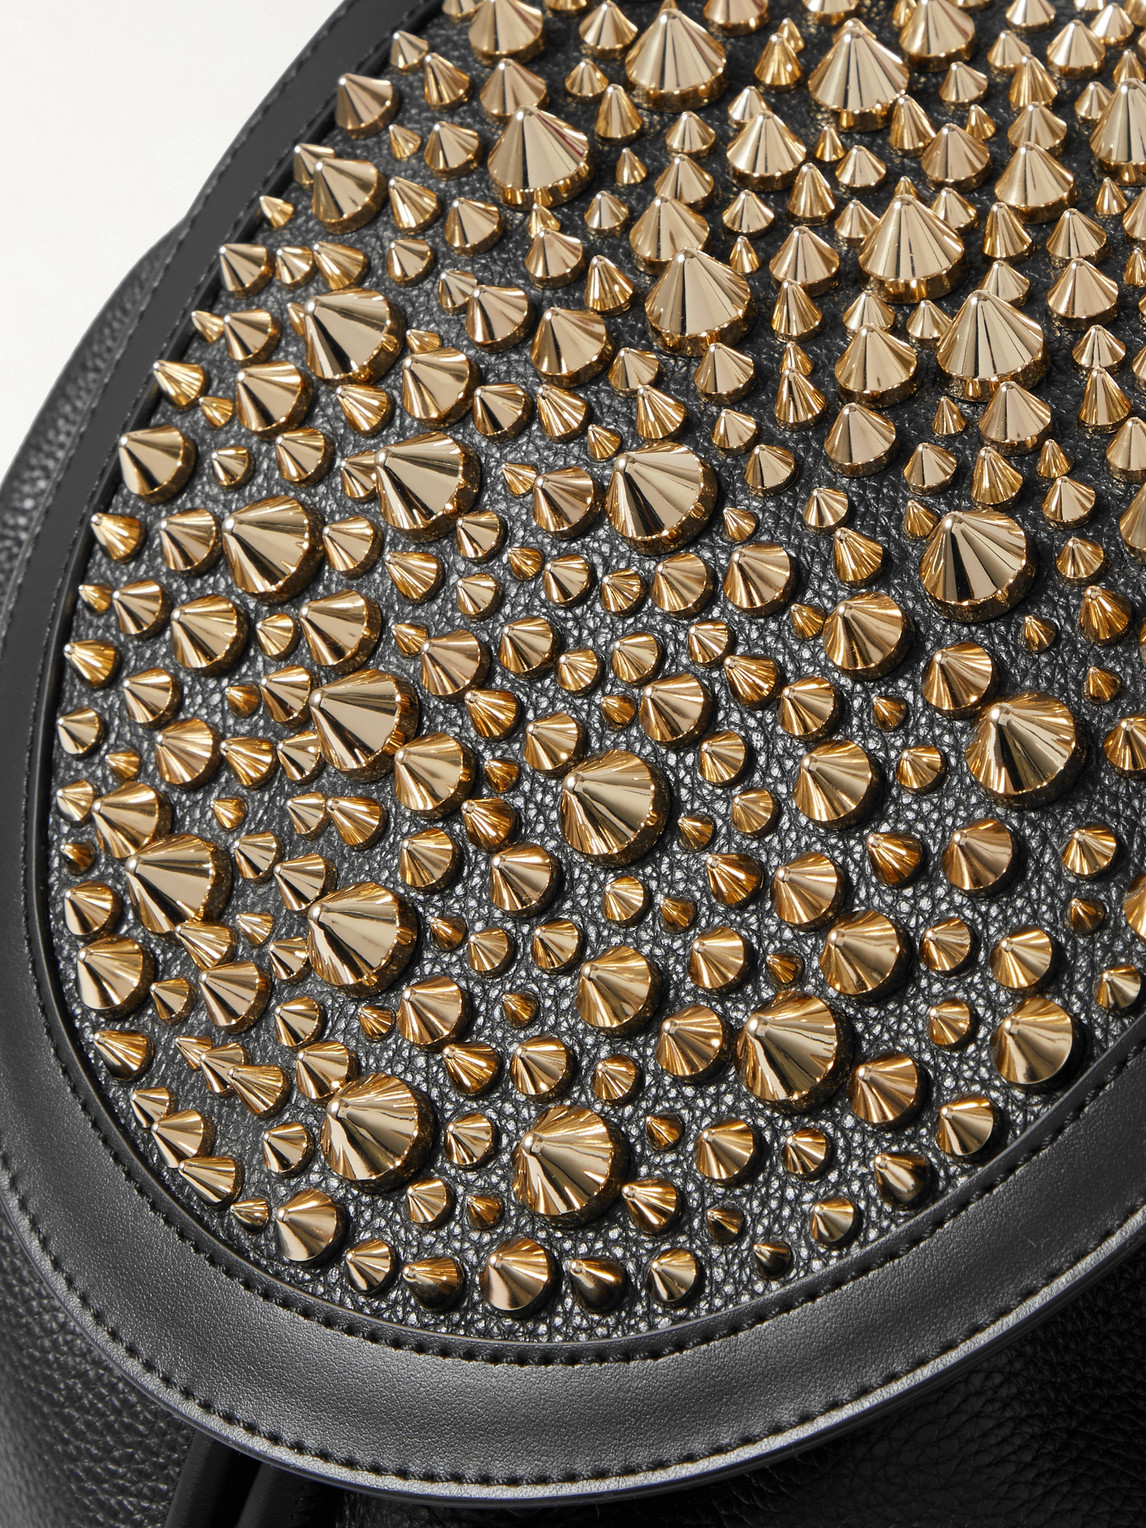 Shop Christian Louboutin Explorafunk Studded Full-grain Leather Backpack In Black